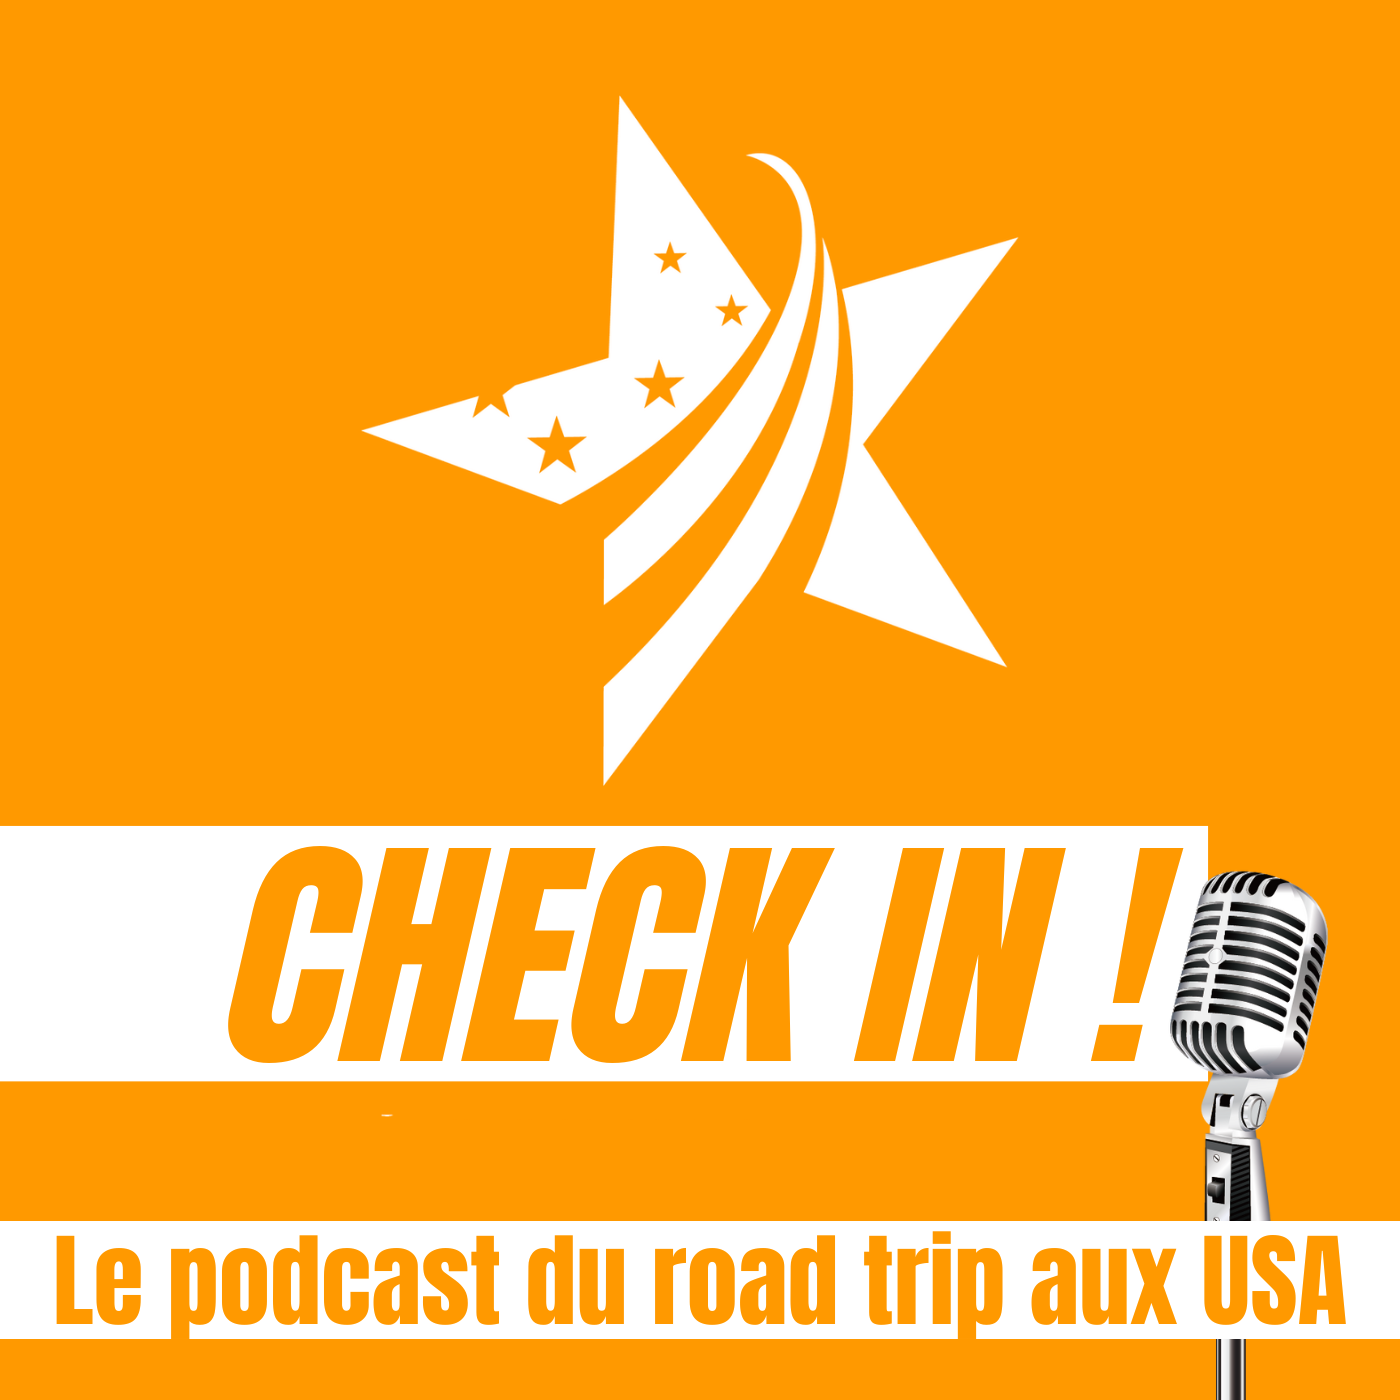 Check in le podcast du road trip aux USA